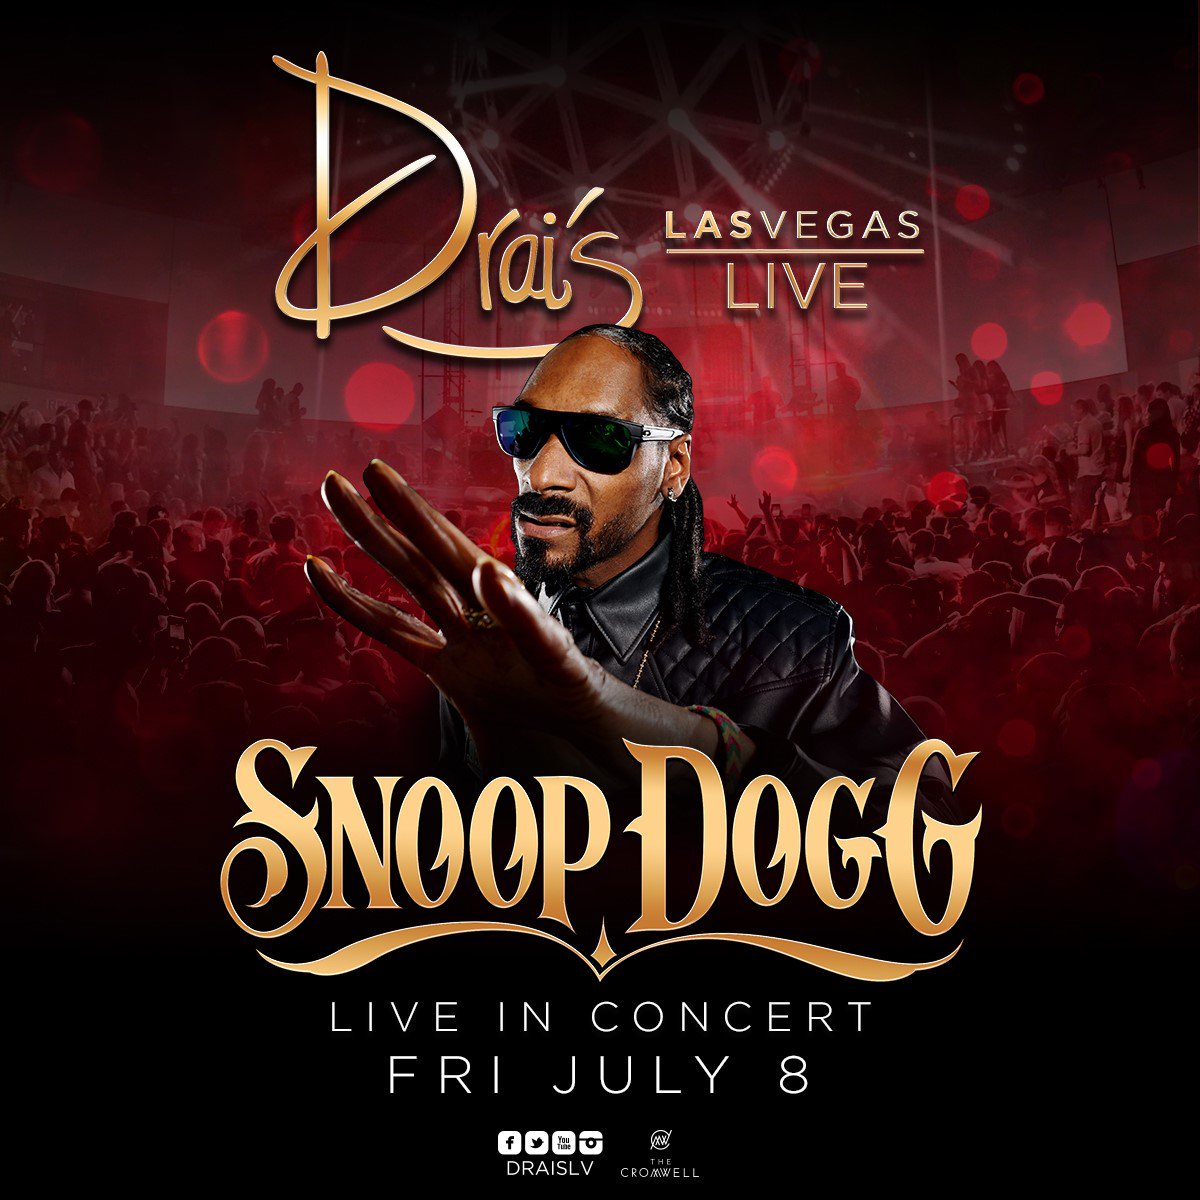 Las Vegas !! Catch me live @draislv July 8 !! https://t.co/CxRfKwYAYv #draislive https://t.co/CtHXb9vufY